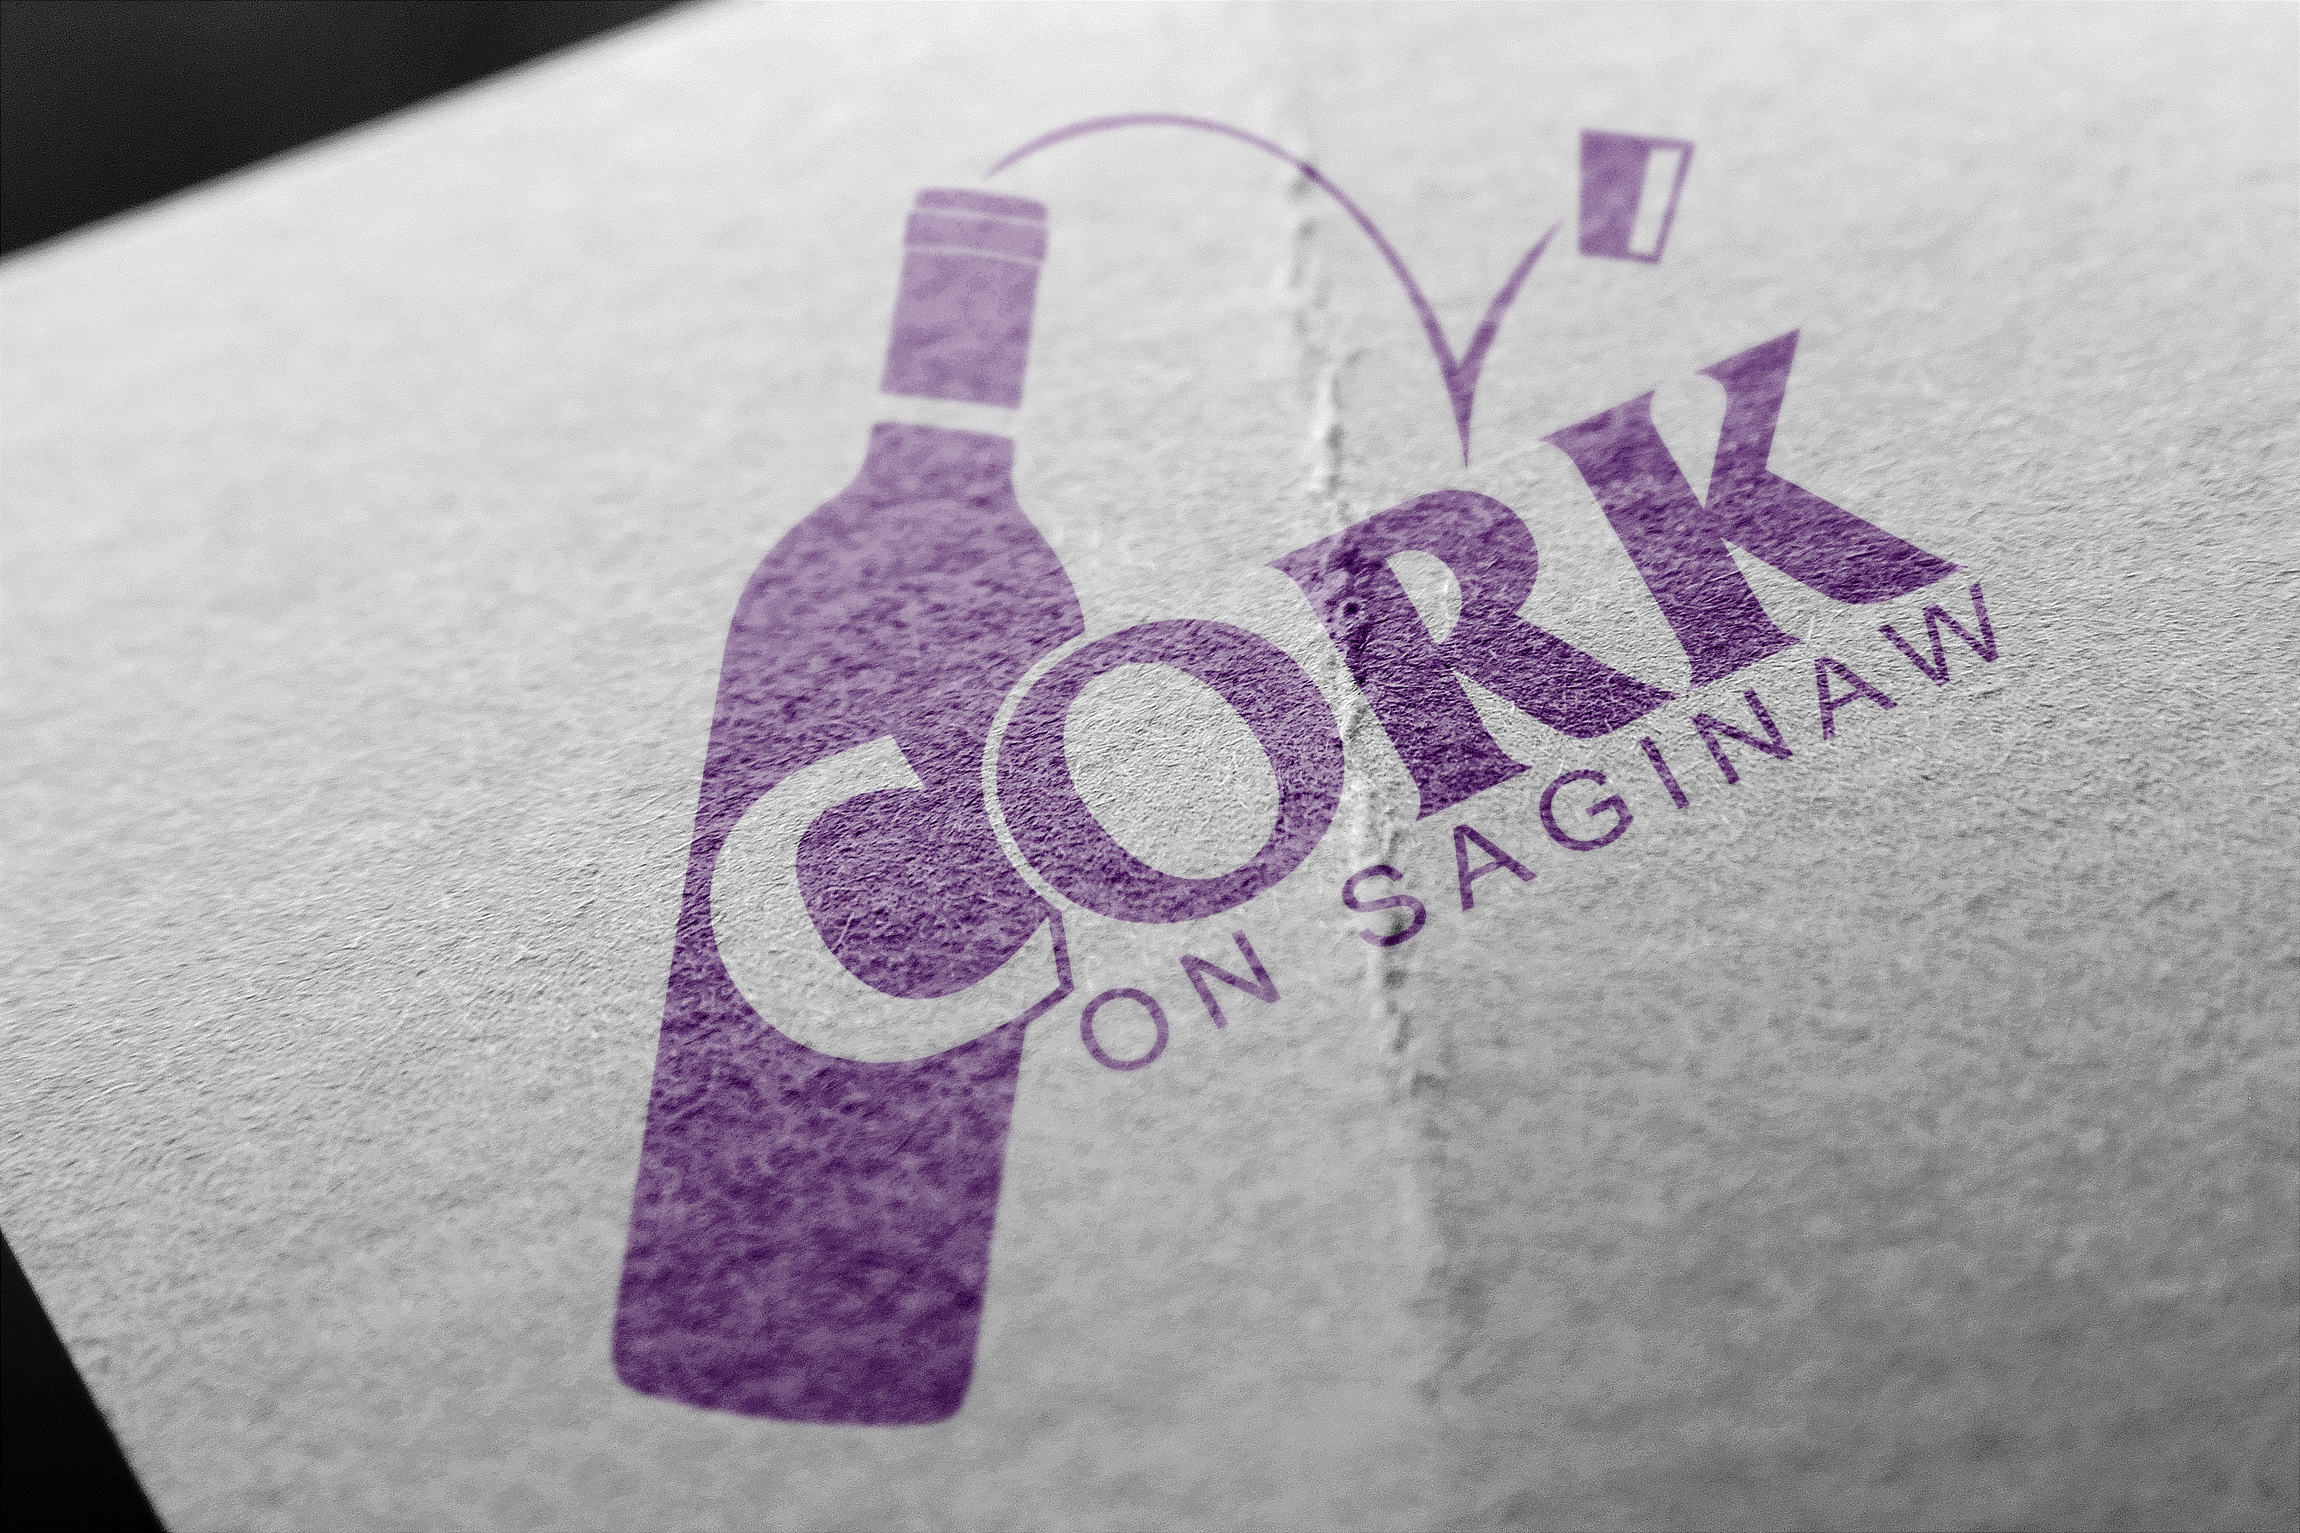 Cork on Saginaw